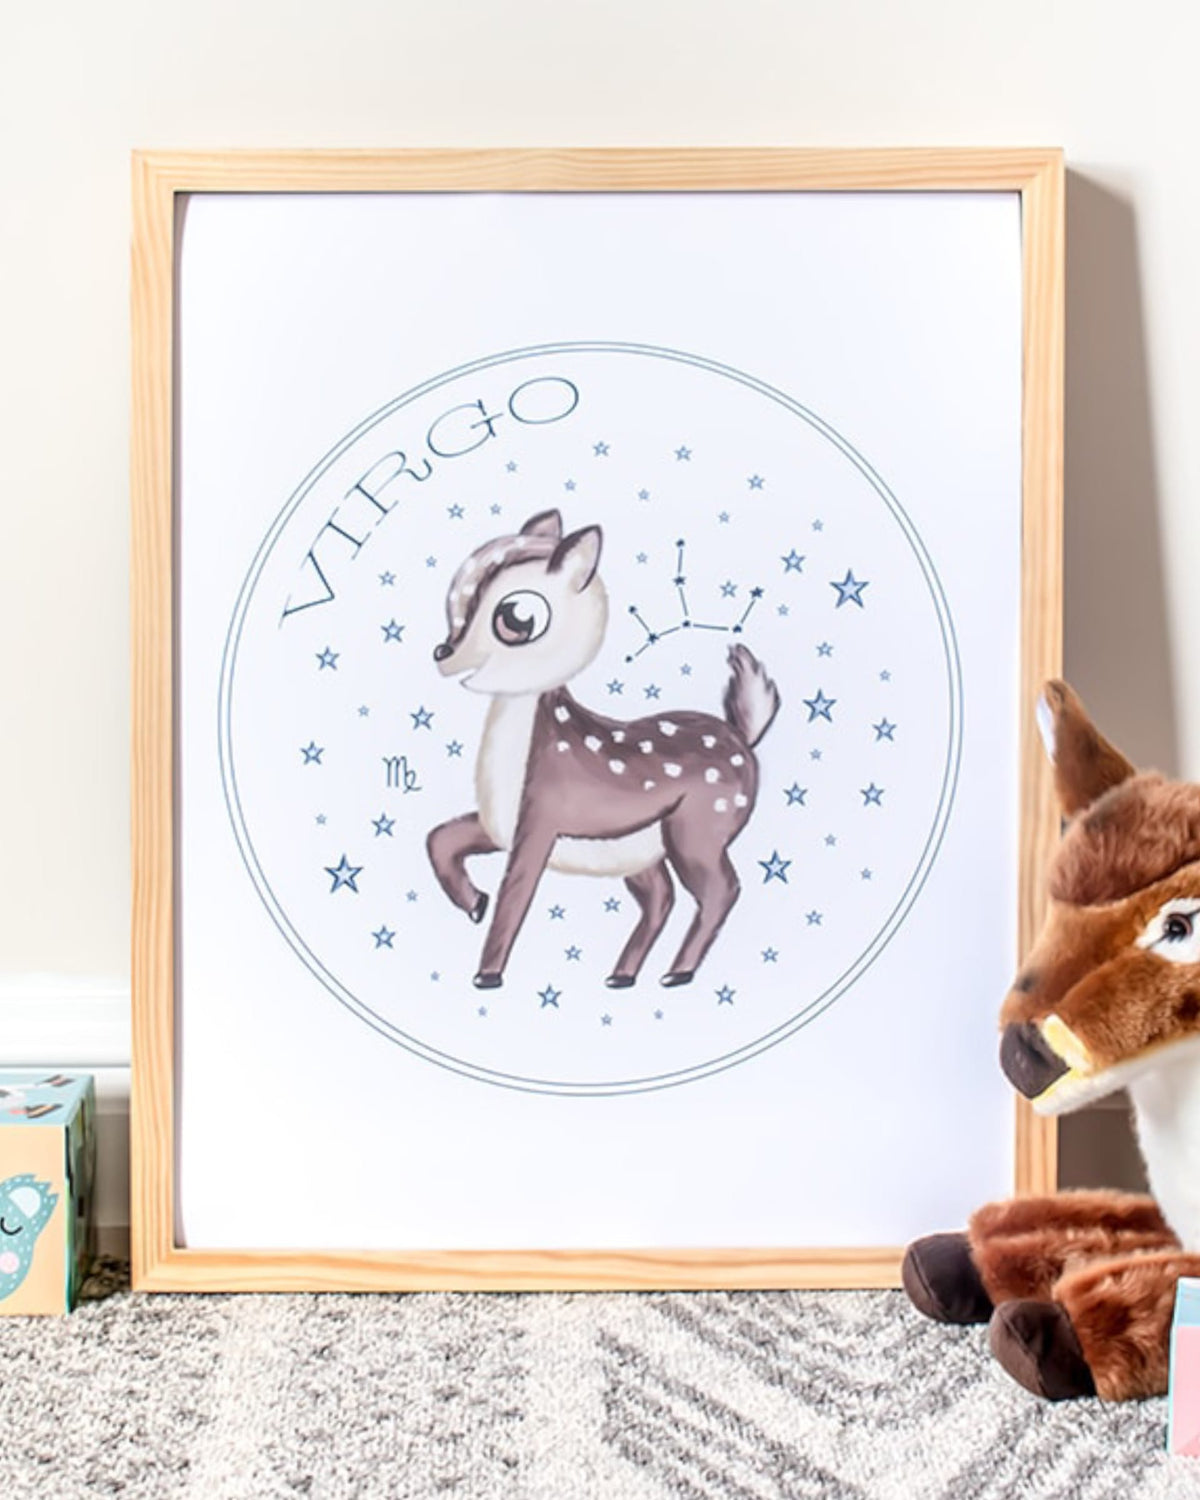 Framed hand drawn stars zodiac nursery decor wall art poster Virgo cute baby deer woodland animal